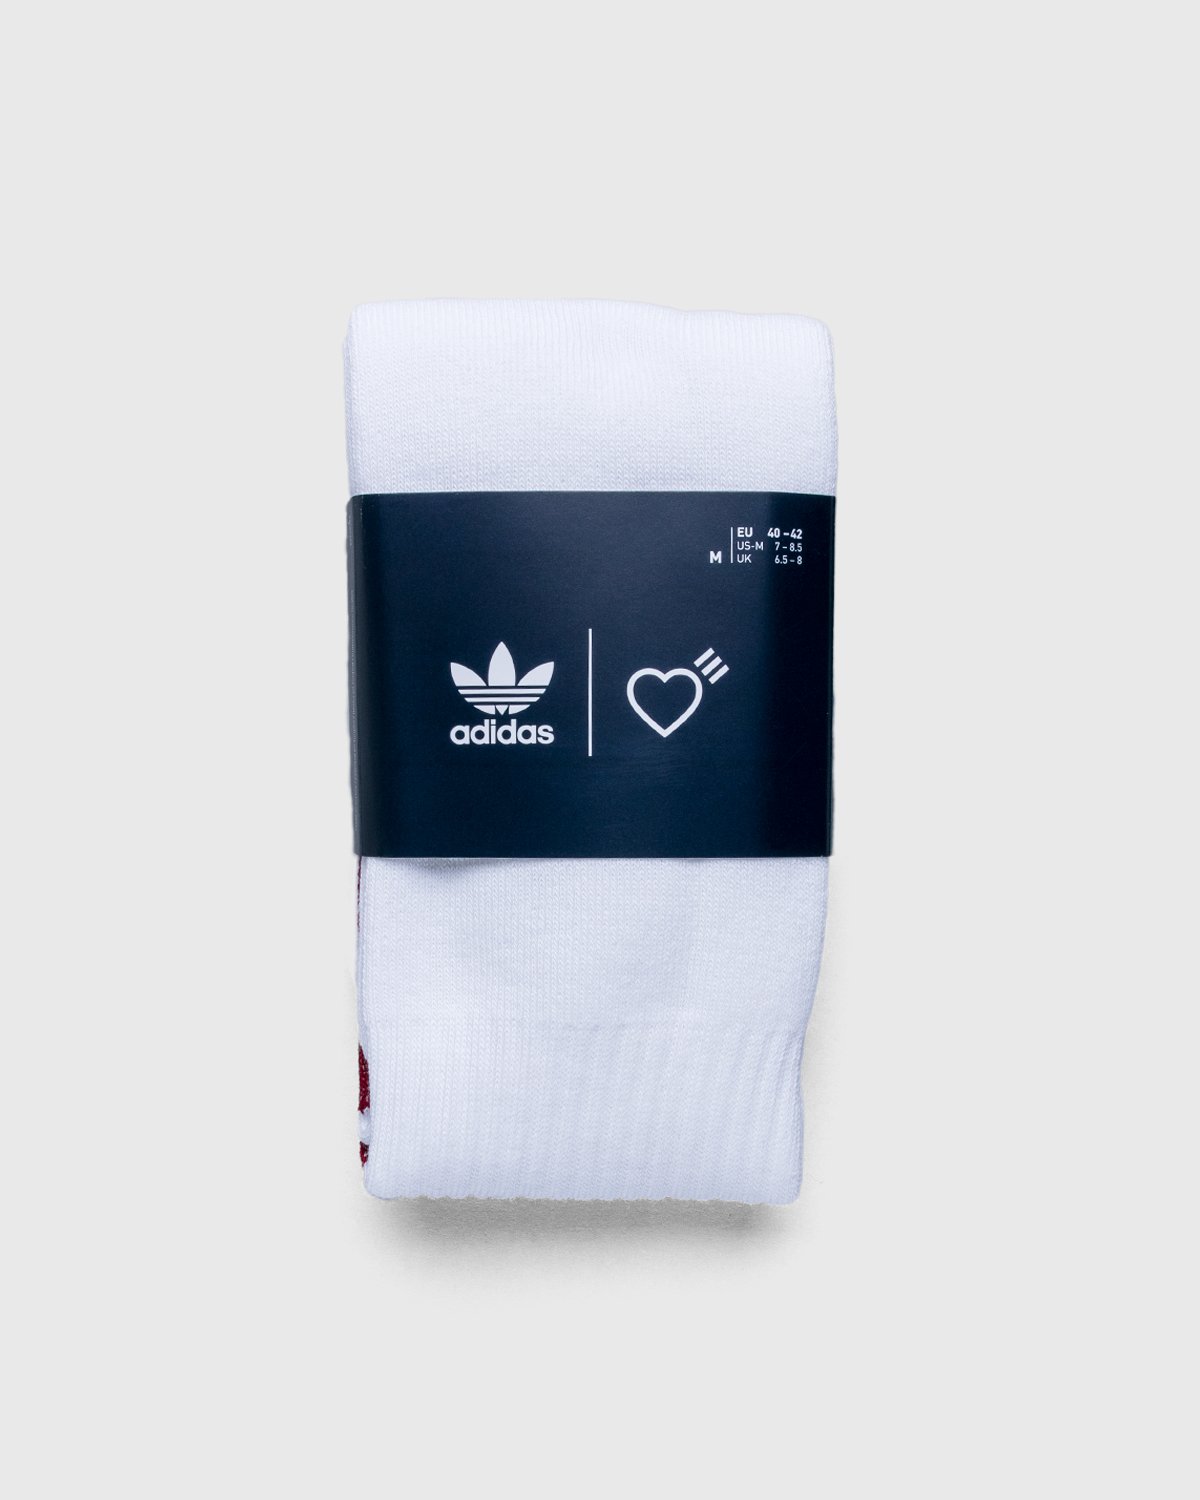 adidas Originals x Human Made - Socks White - Accessories - White - Image 2